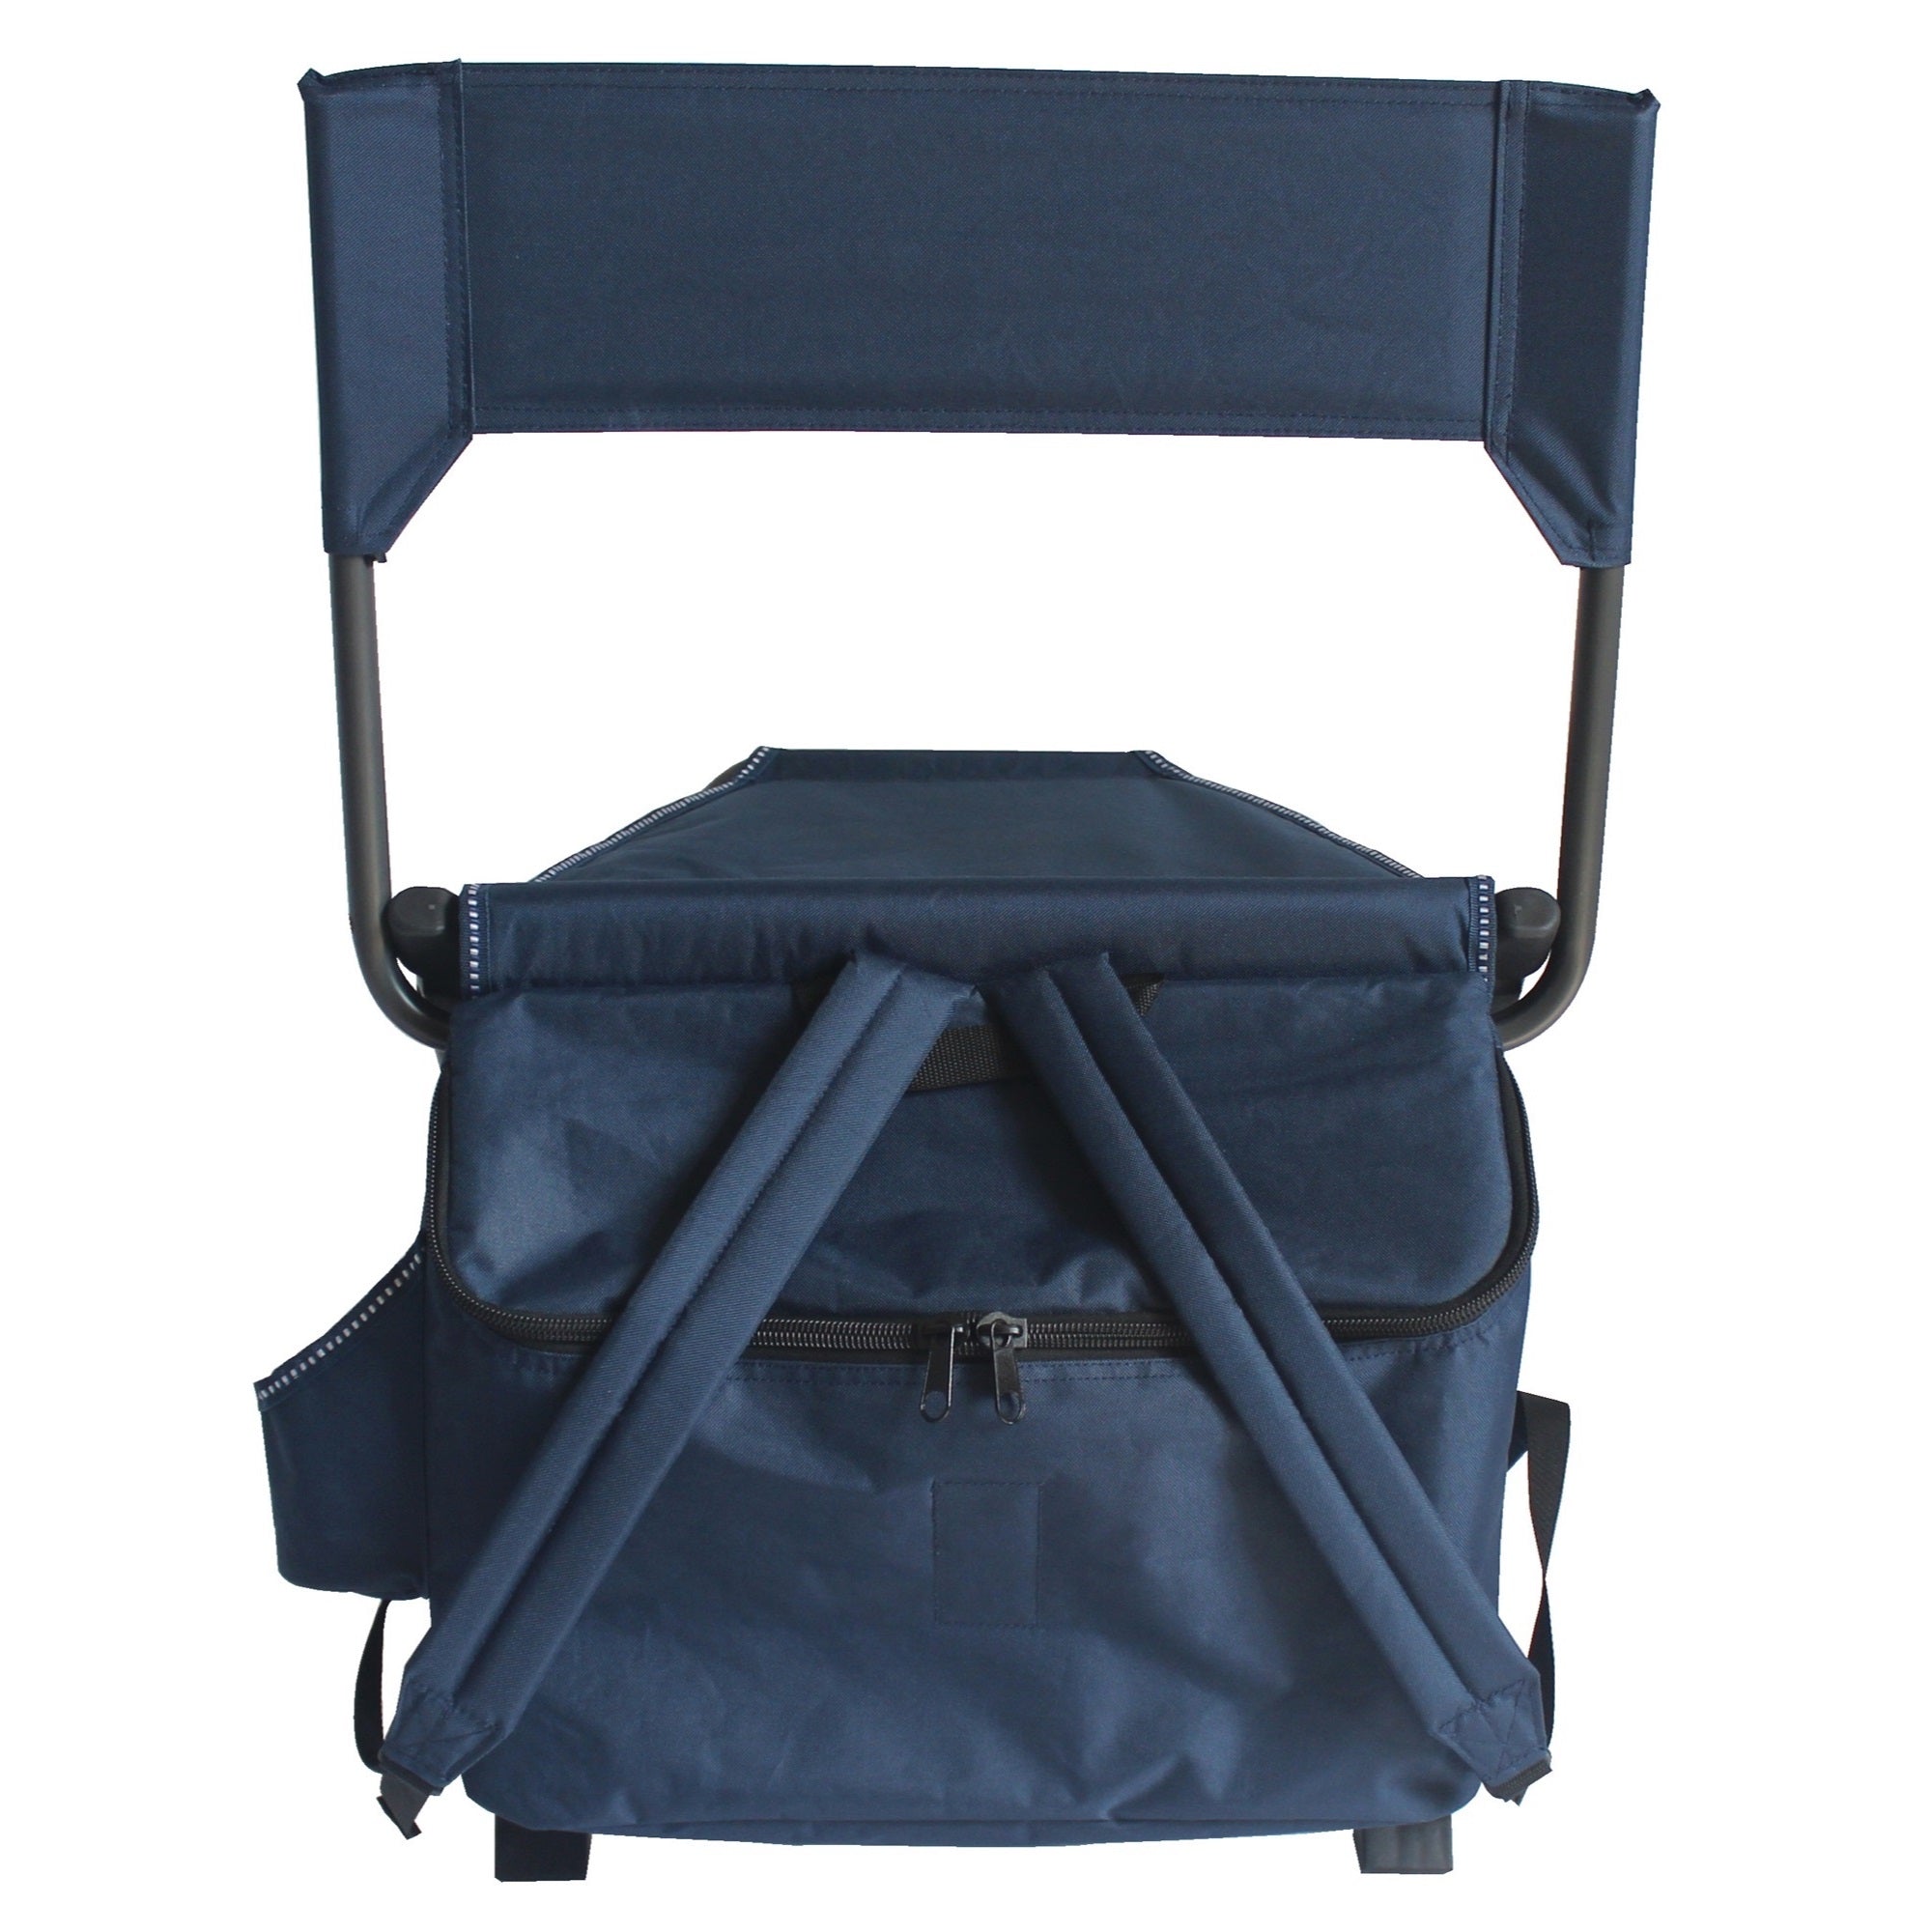 Zenithen Limited Folding Backpack Chair, Dark Blue